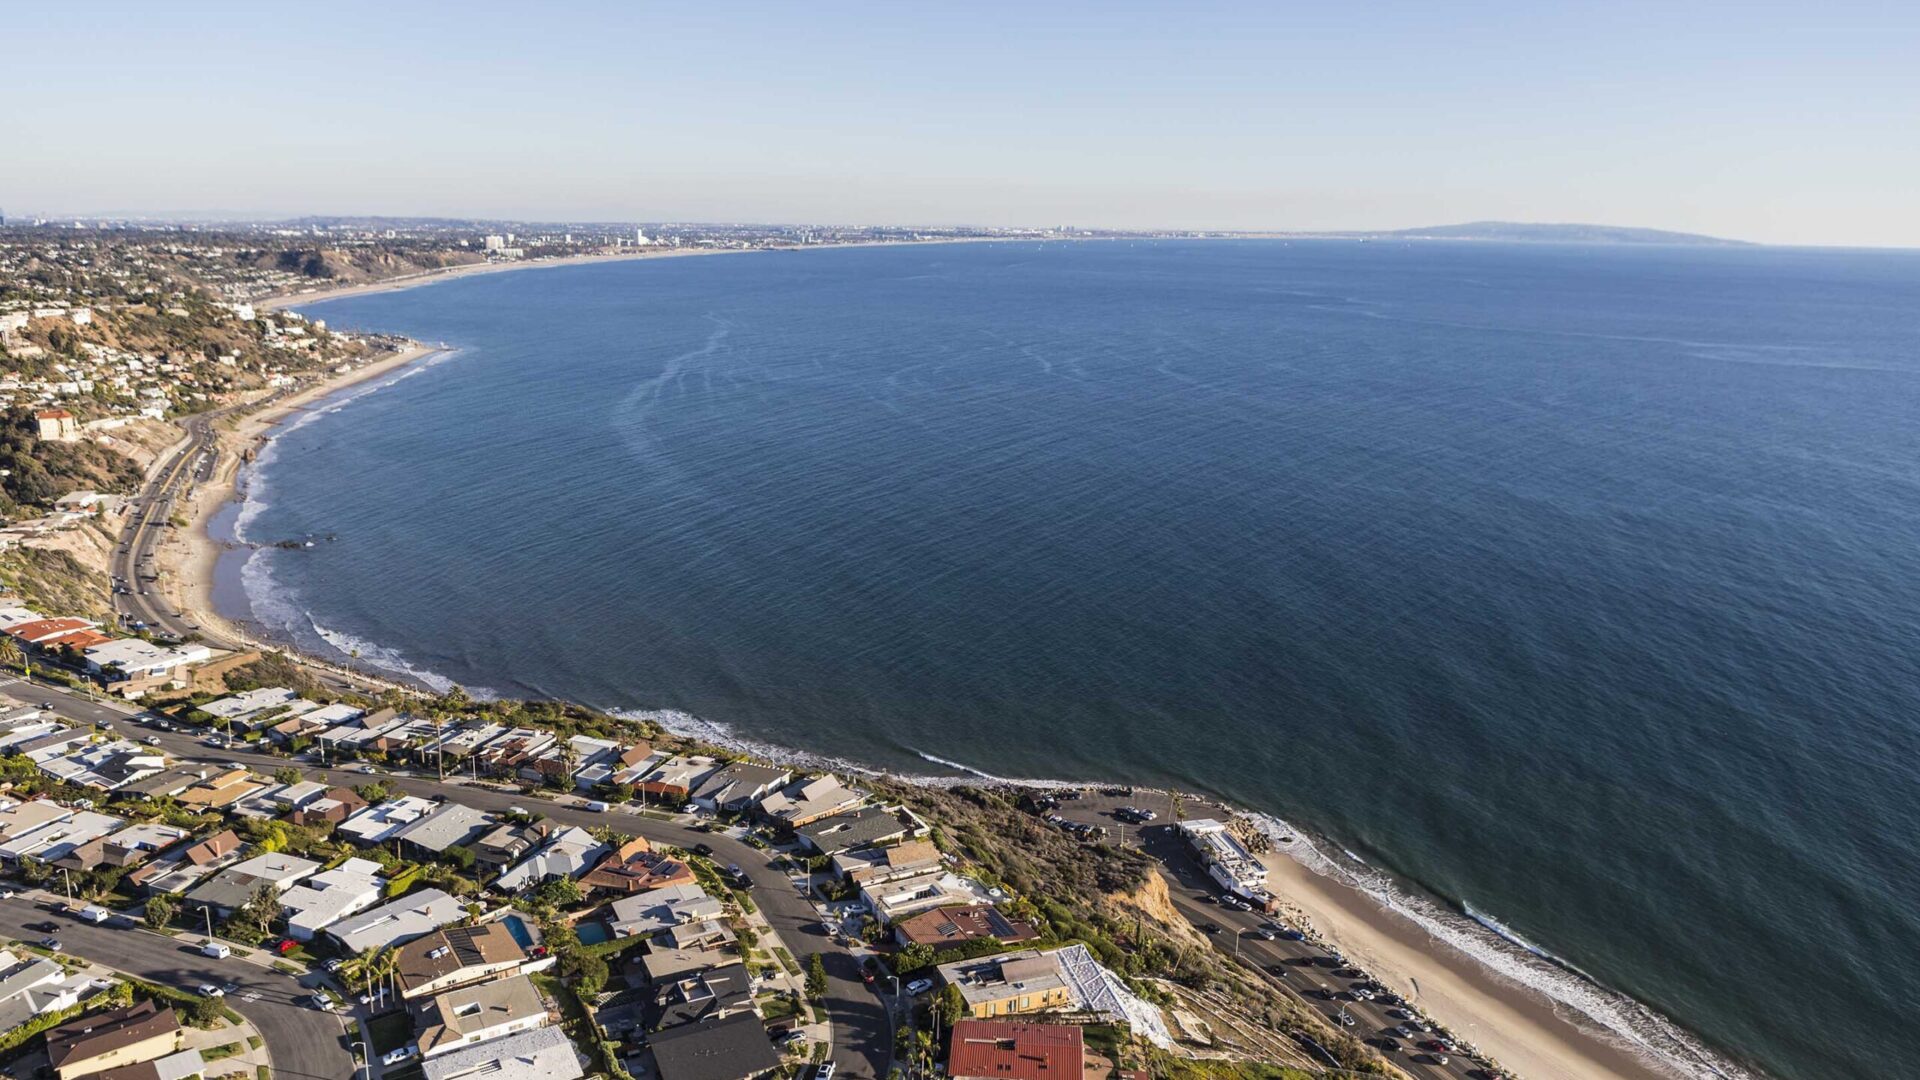 Pacific Palisades ocean view homes overlooking Santa Monica Bay in Los Angeles, California.